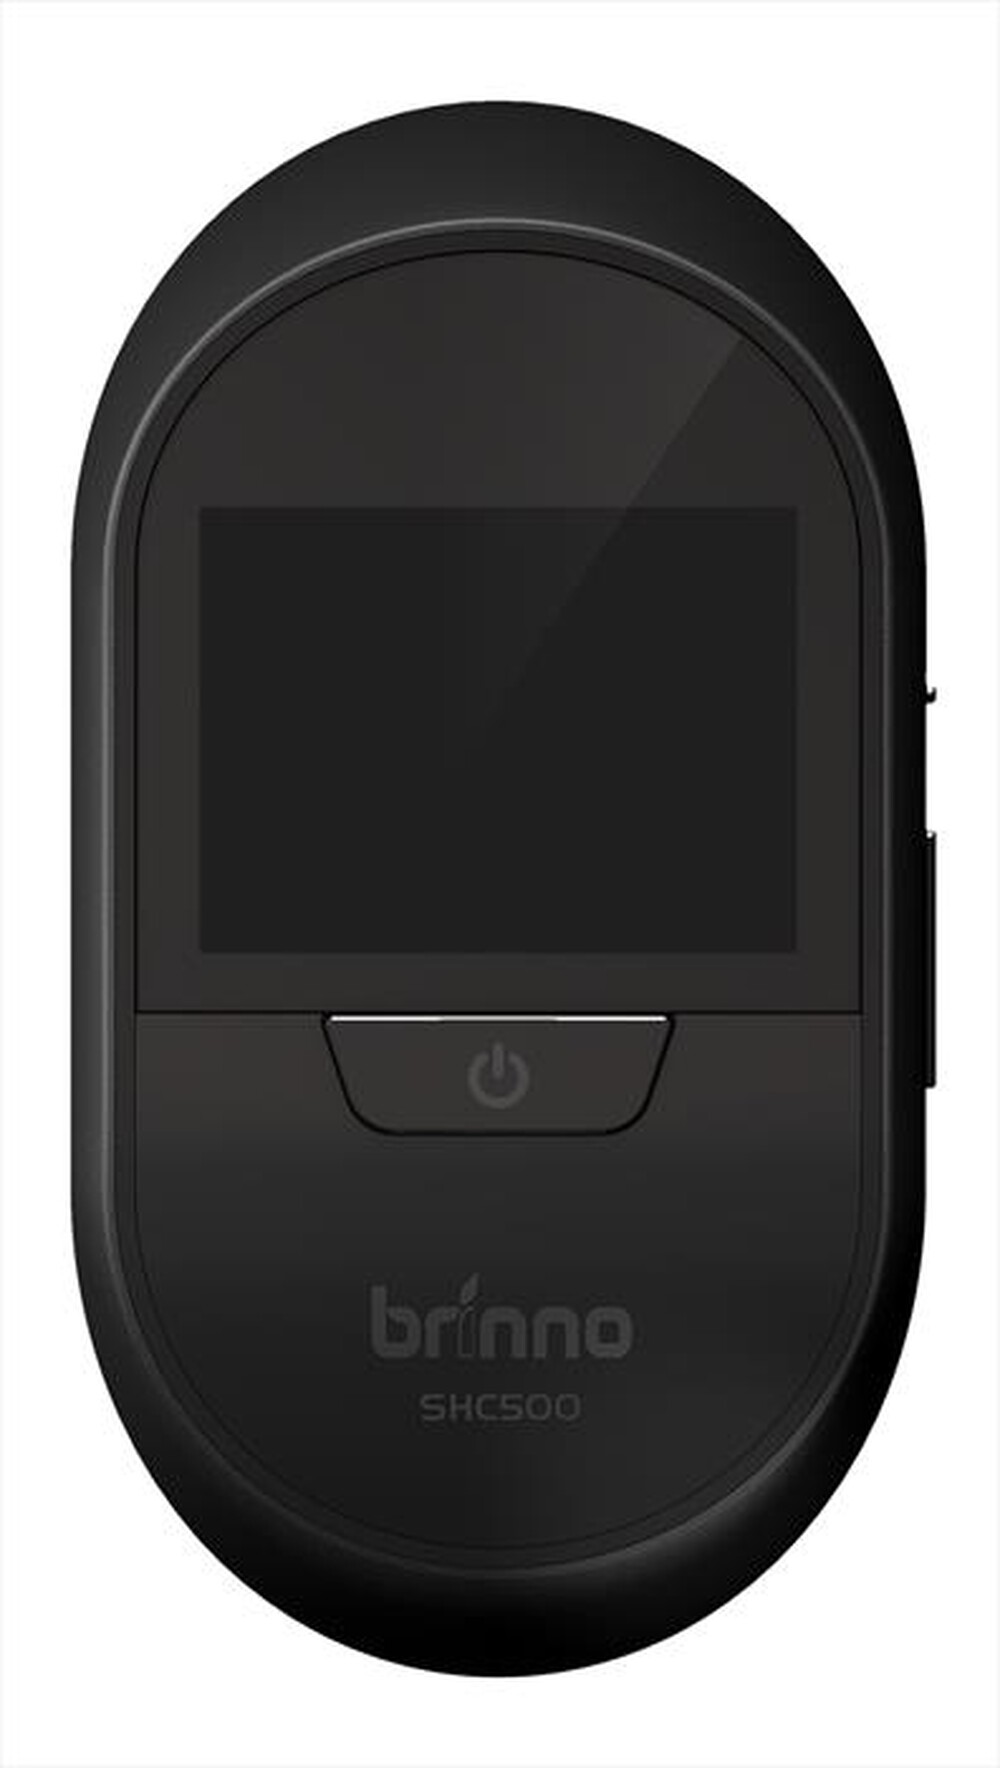 "BRINNO - SHC500-Nero"